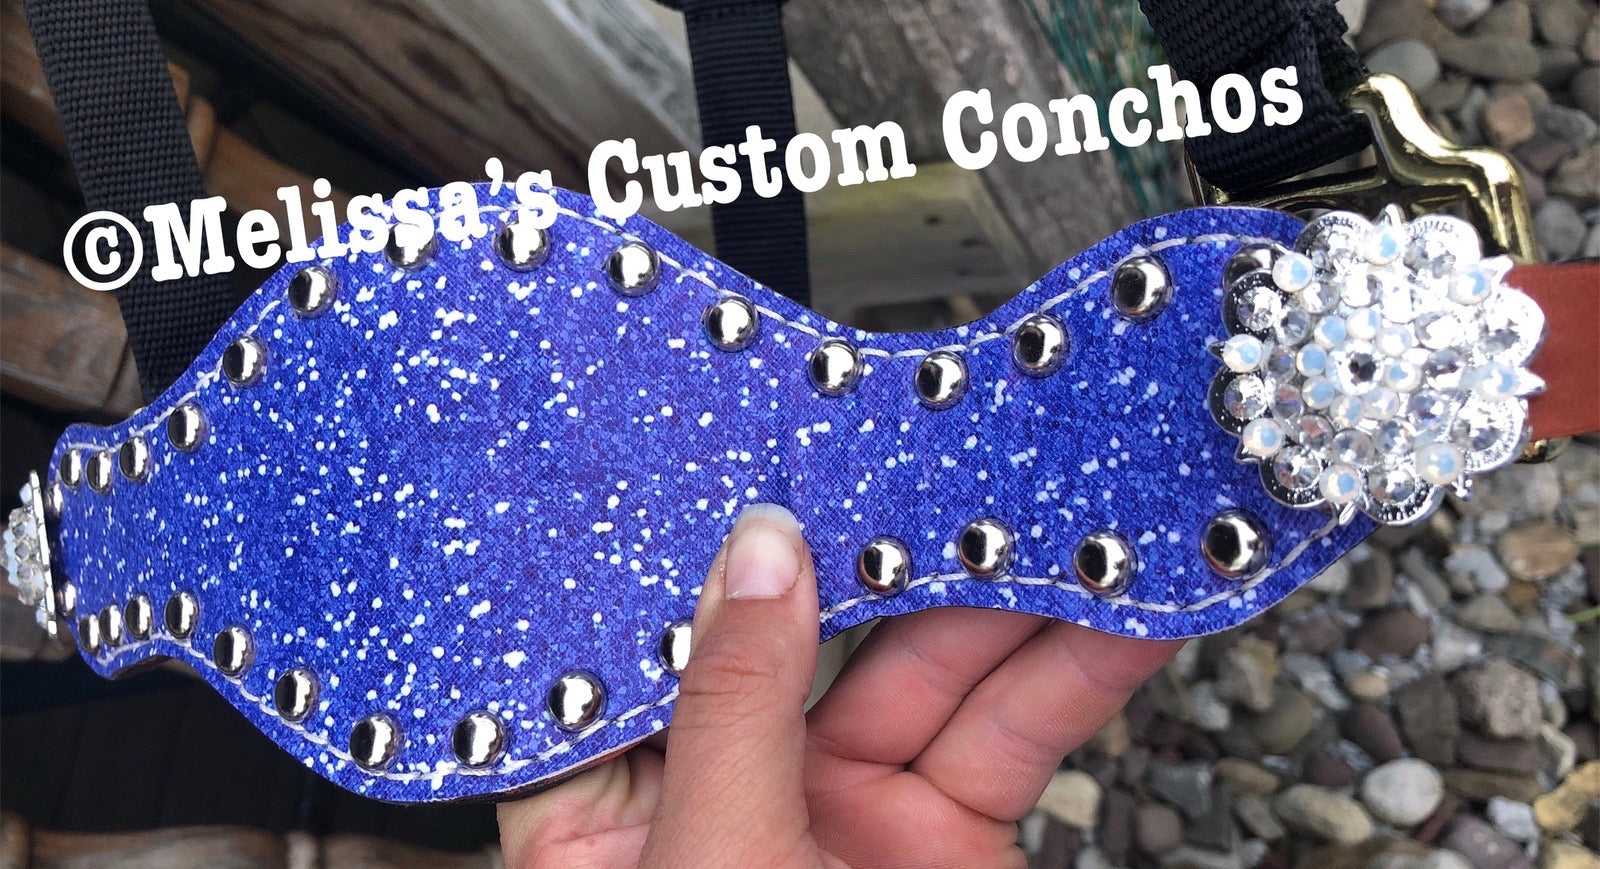 Gray Bronc Halter – Melissa's Custom Conchos